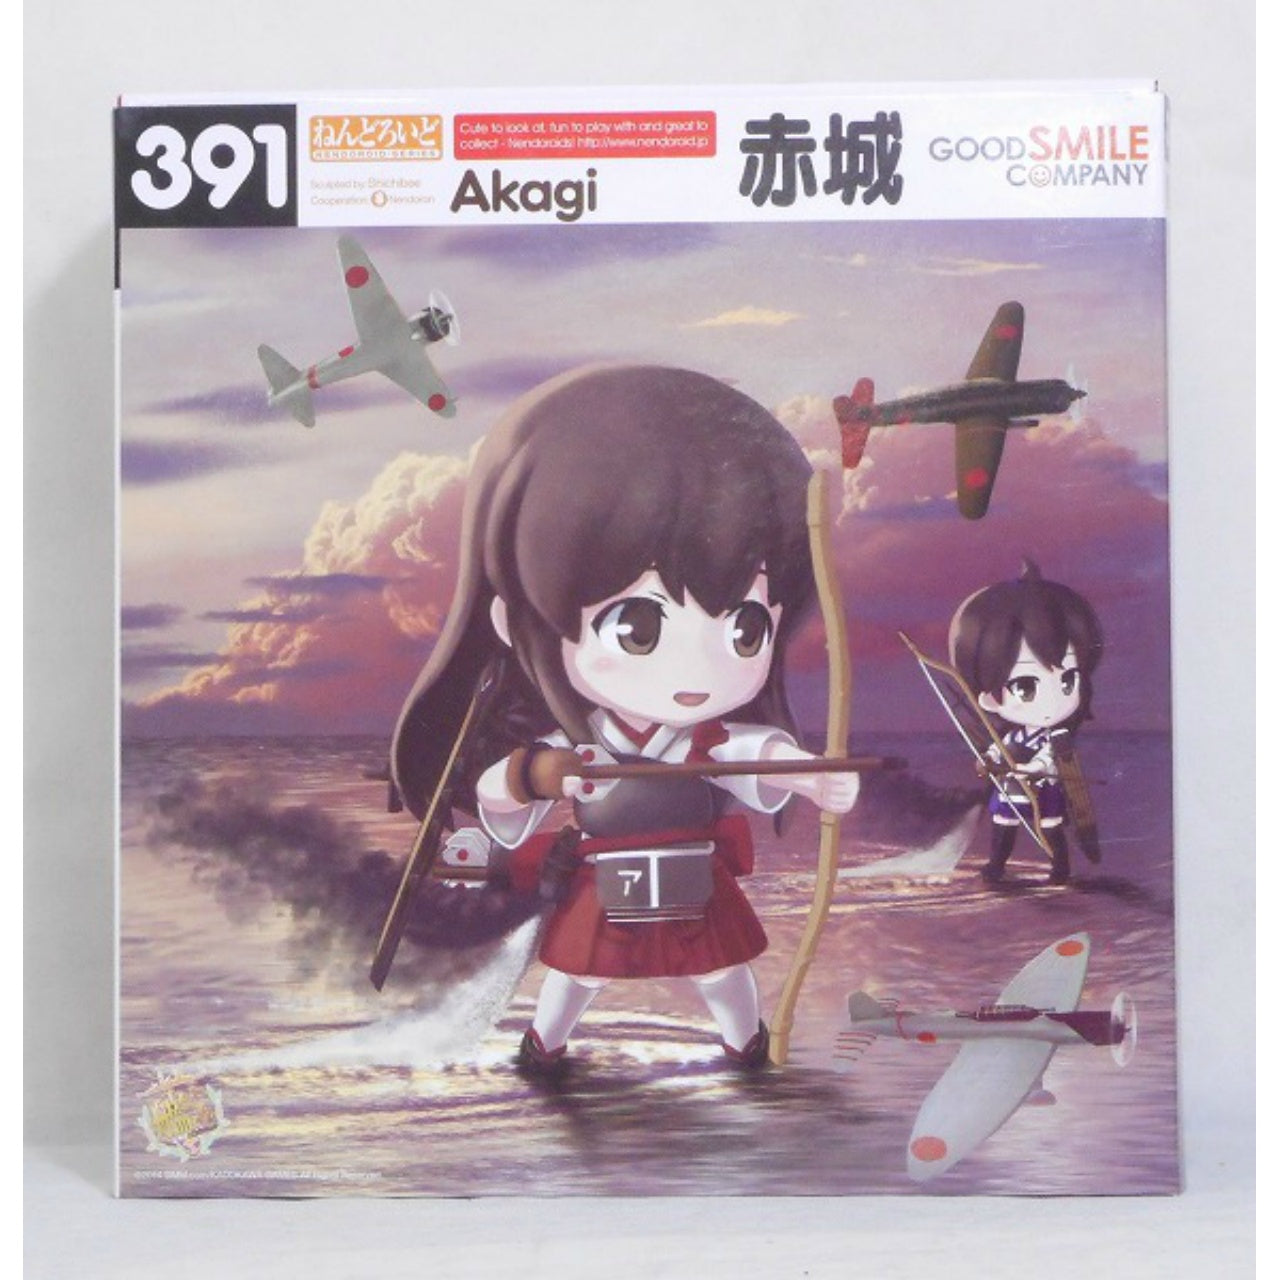 Nendoroid No.391 Akagi with Goodsmile Online Shop Bonus Item